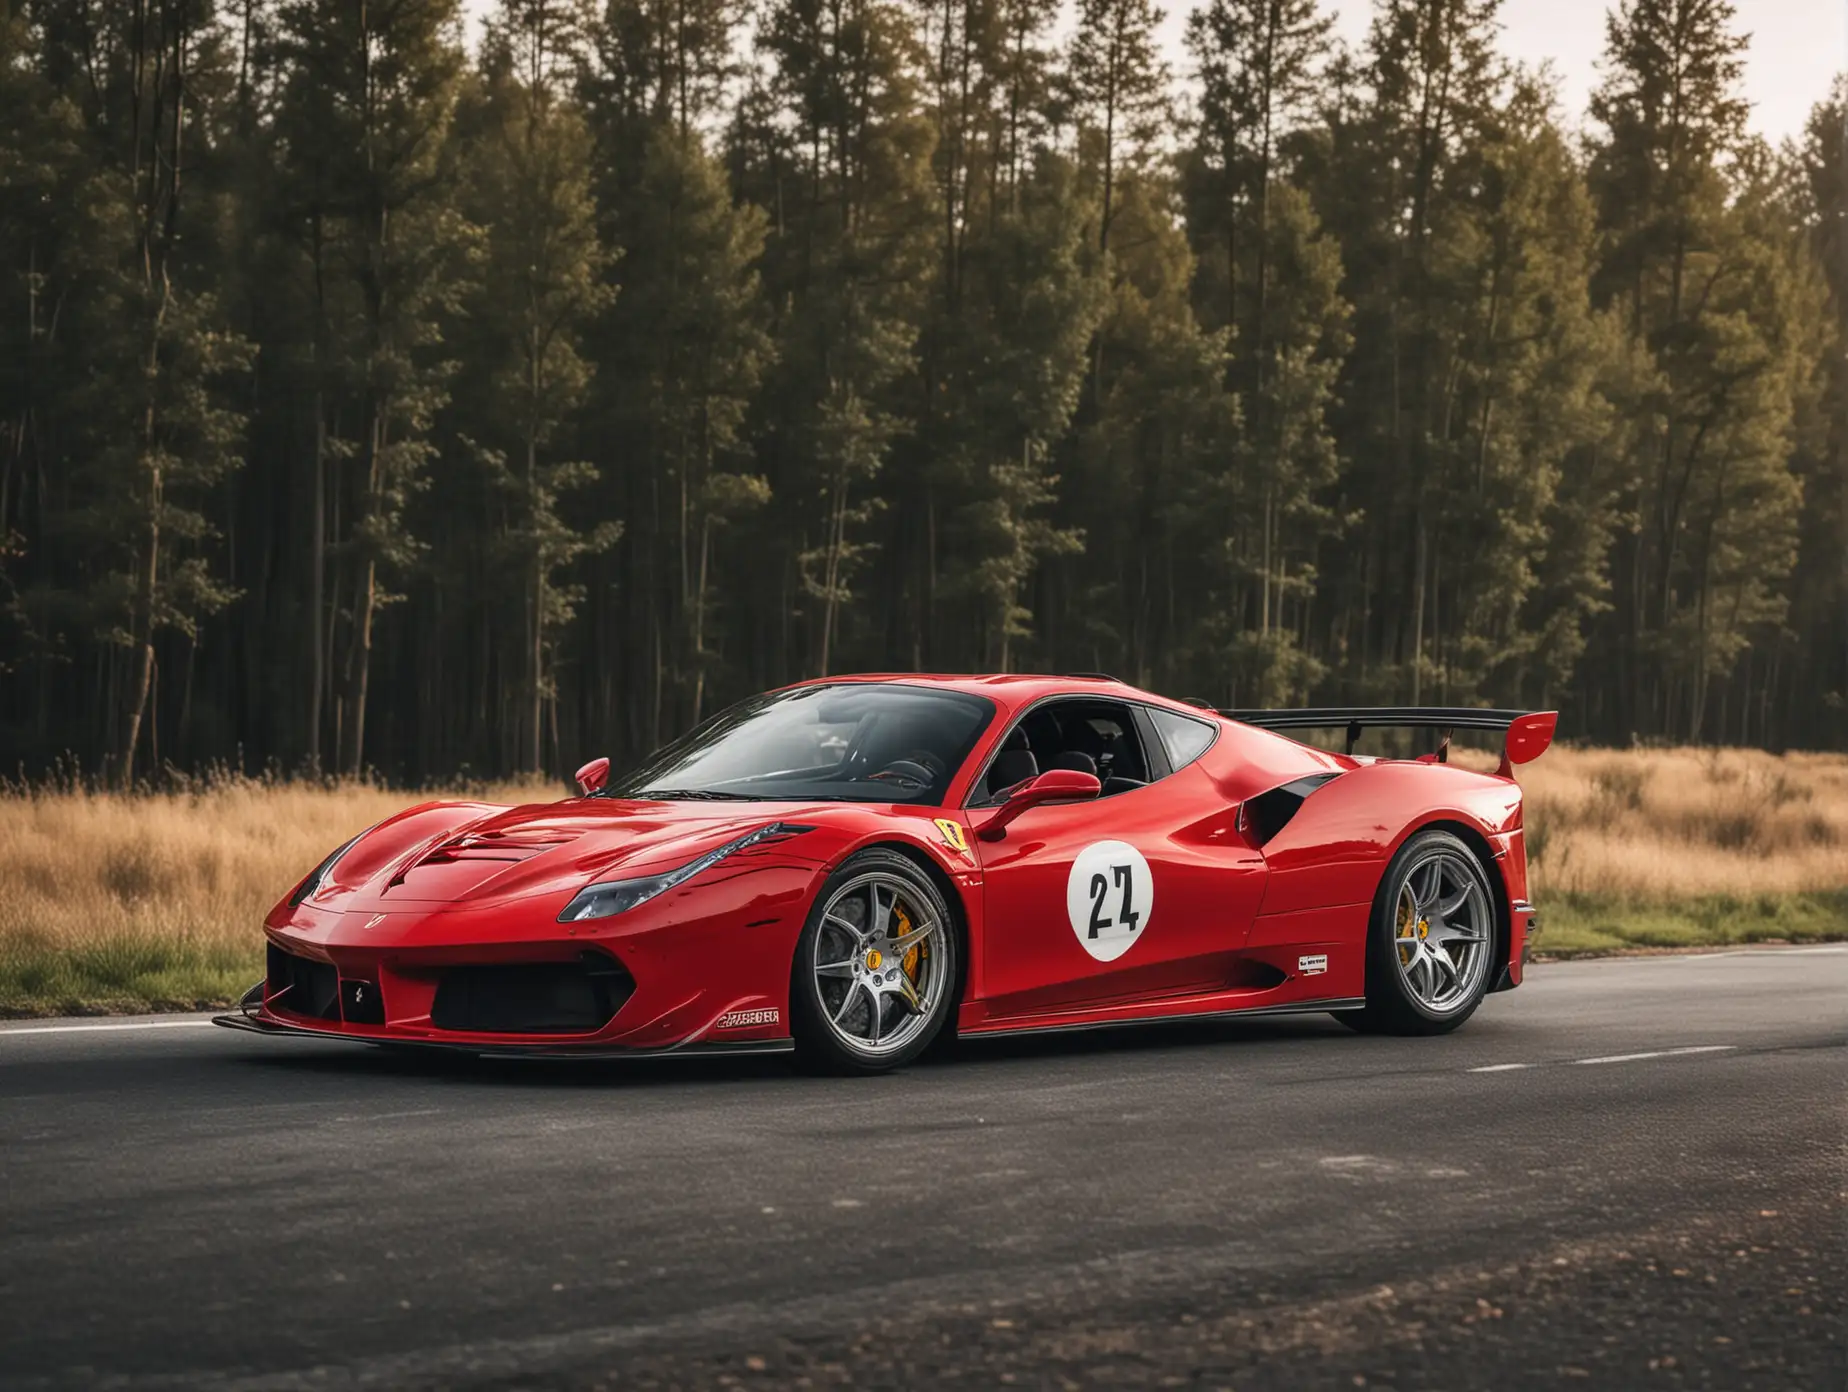 Sleek Red Ferrari Racecar Parked on Roadside Professional Photography Capture